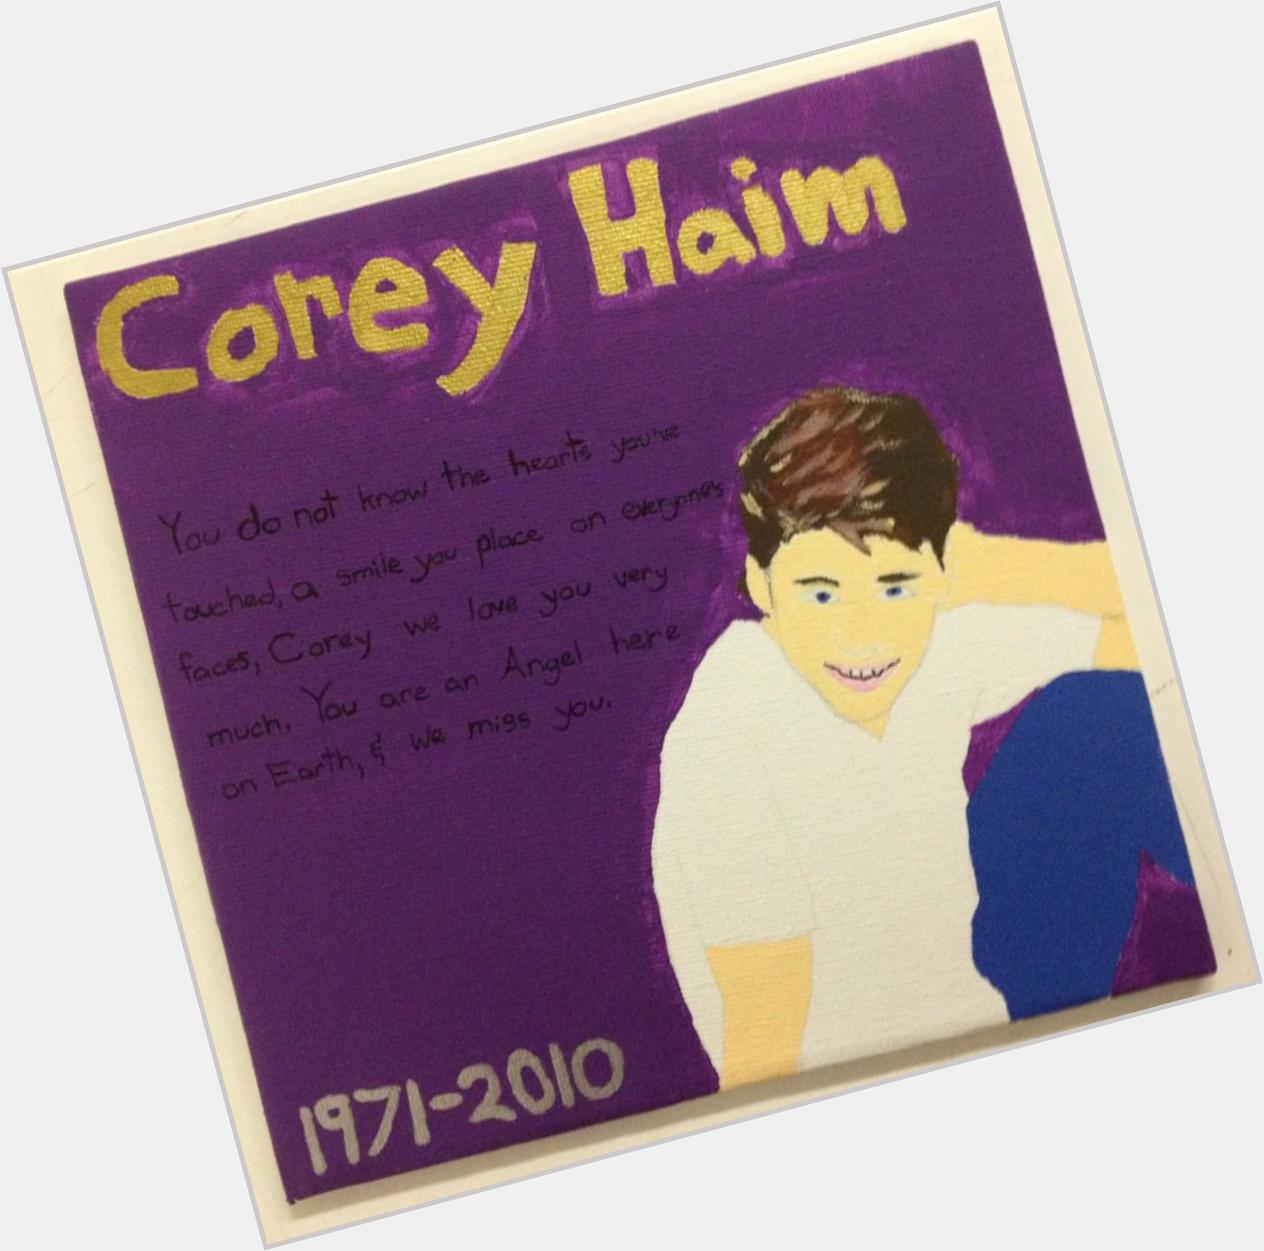  Happy 43rd Birthday Corey Haim. I made U a little something. Love U & Miss U 